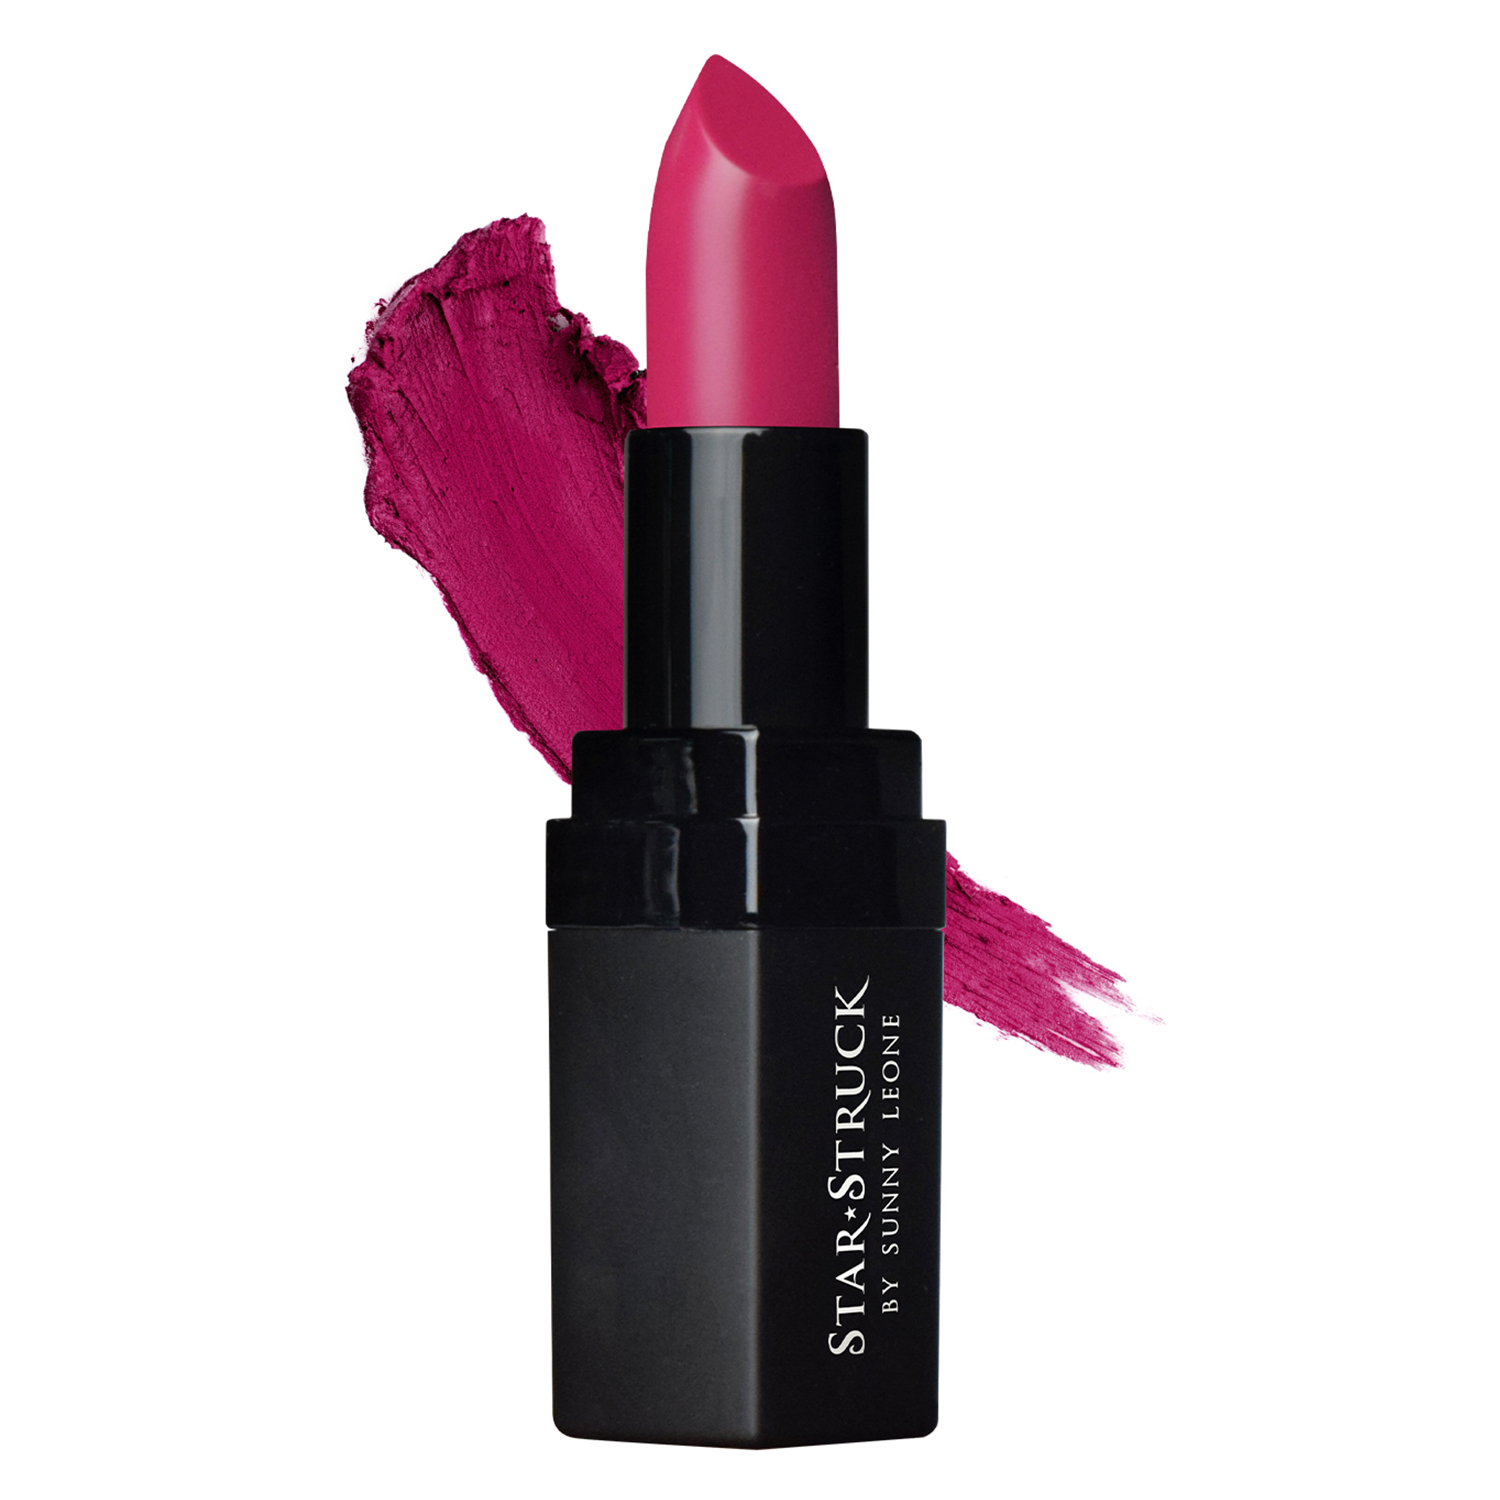 Star Struck by Sunny Leone Intense Matte Lipstick, 4.45gm-Lip Color - Rooberry